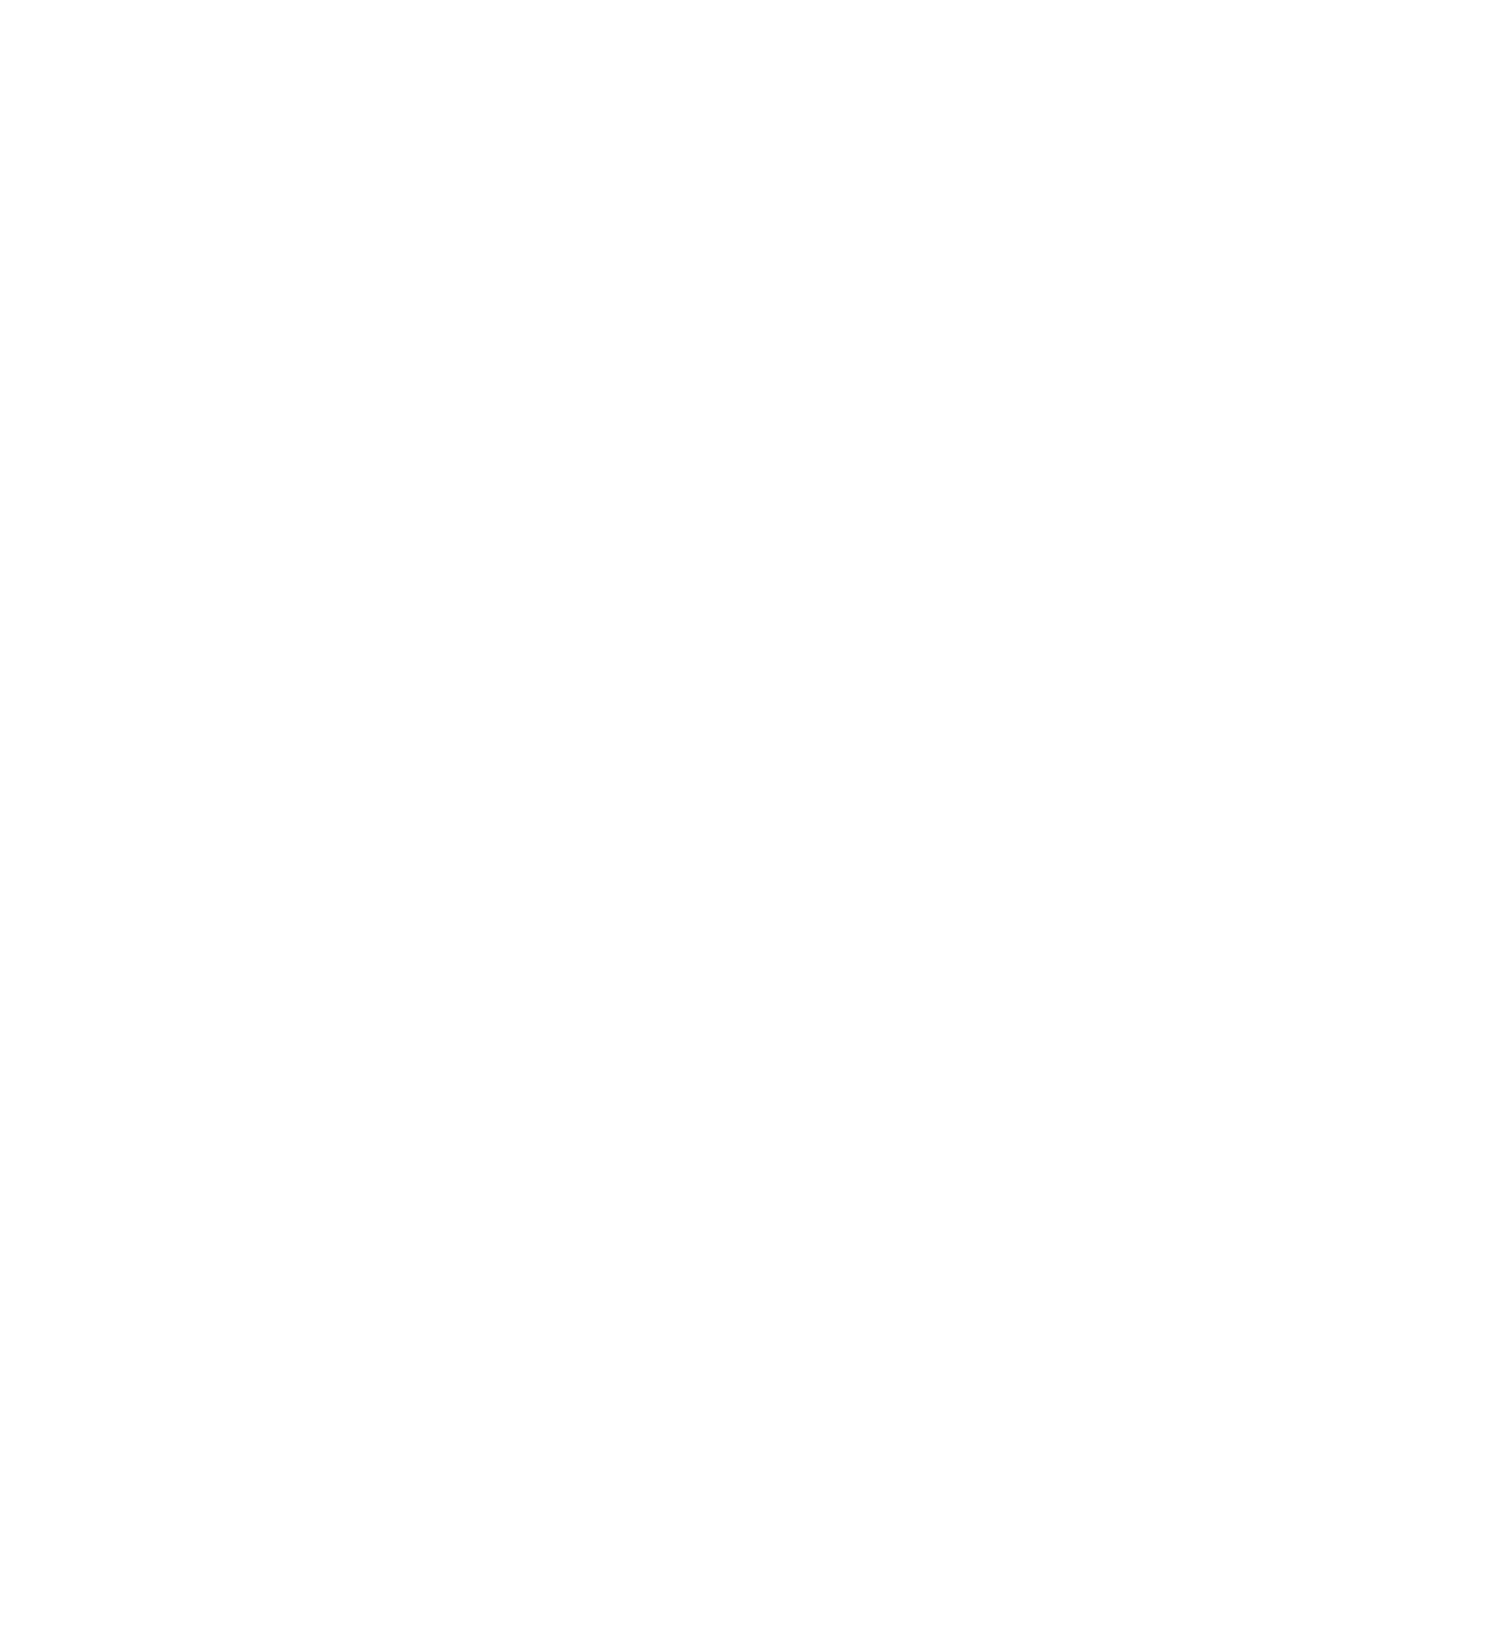 CMM Financial